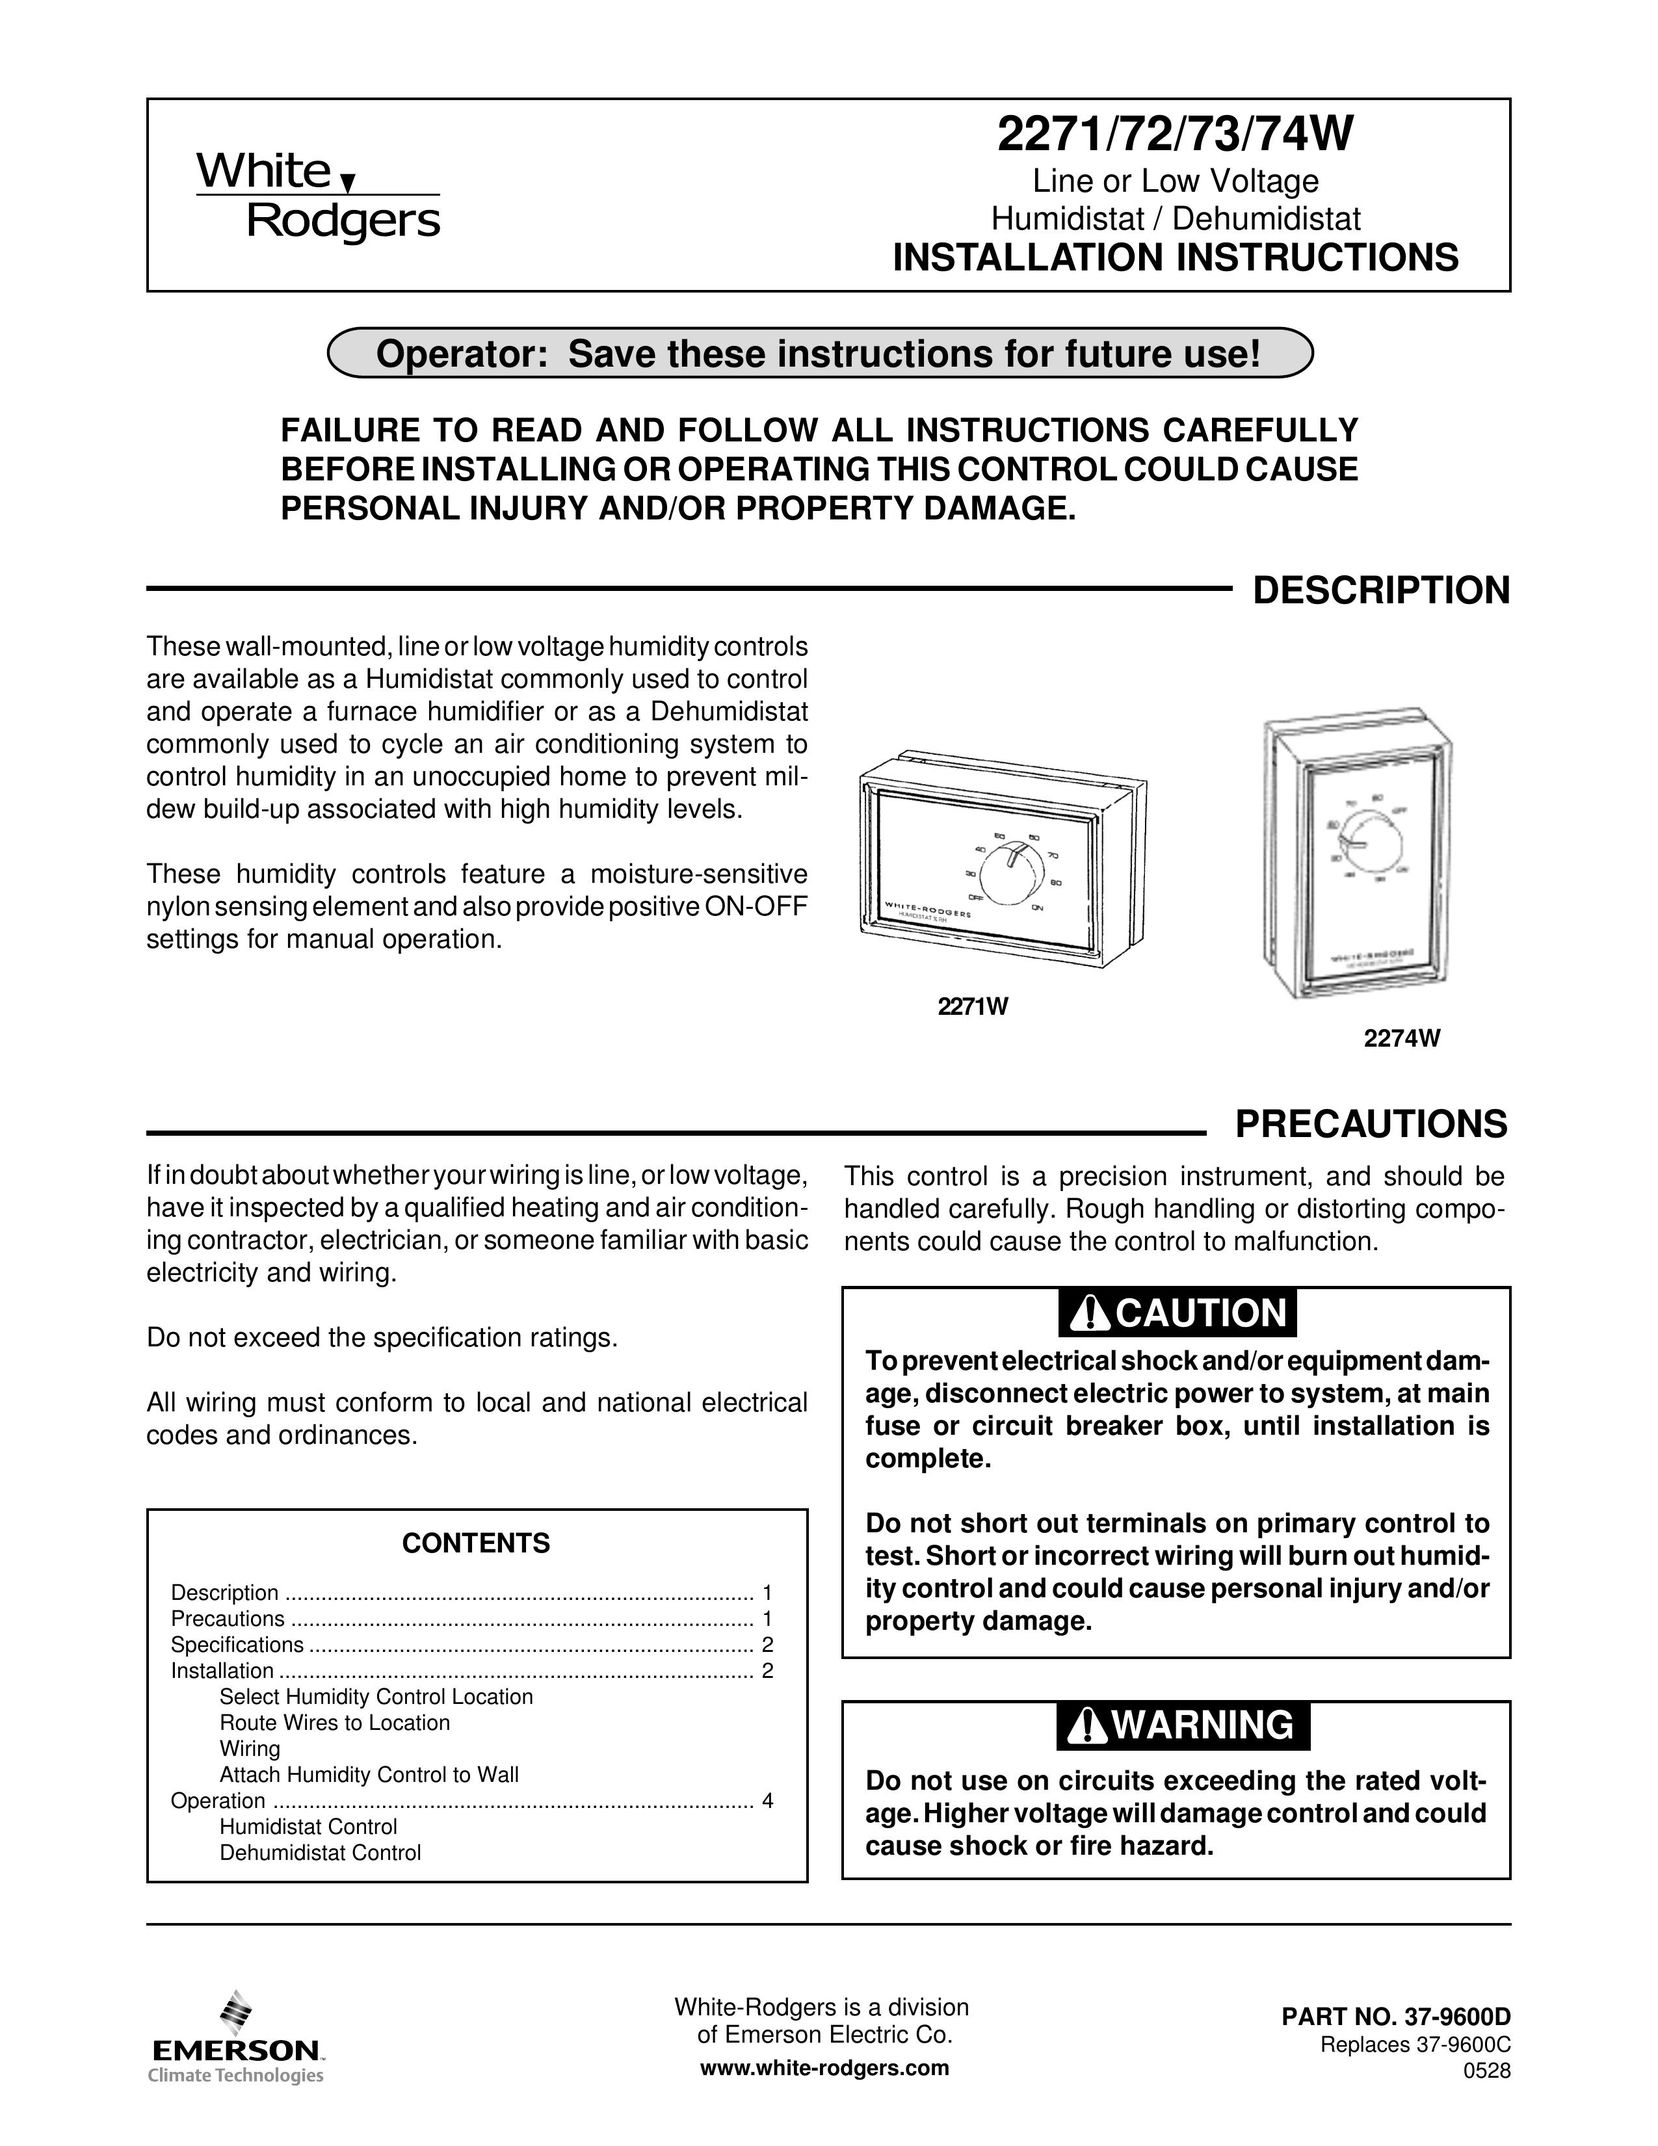 White Rodgers 2273W Dehumidifier User Manual